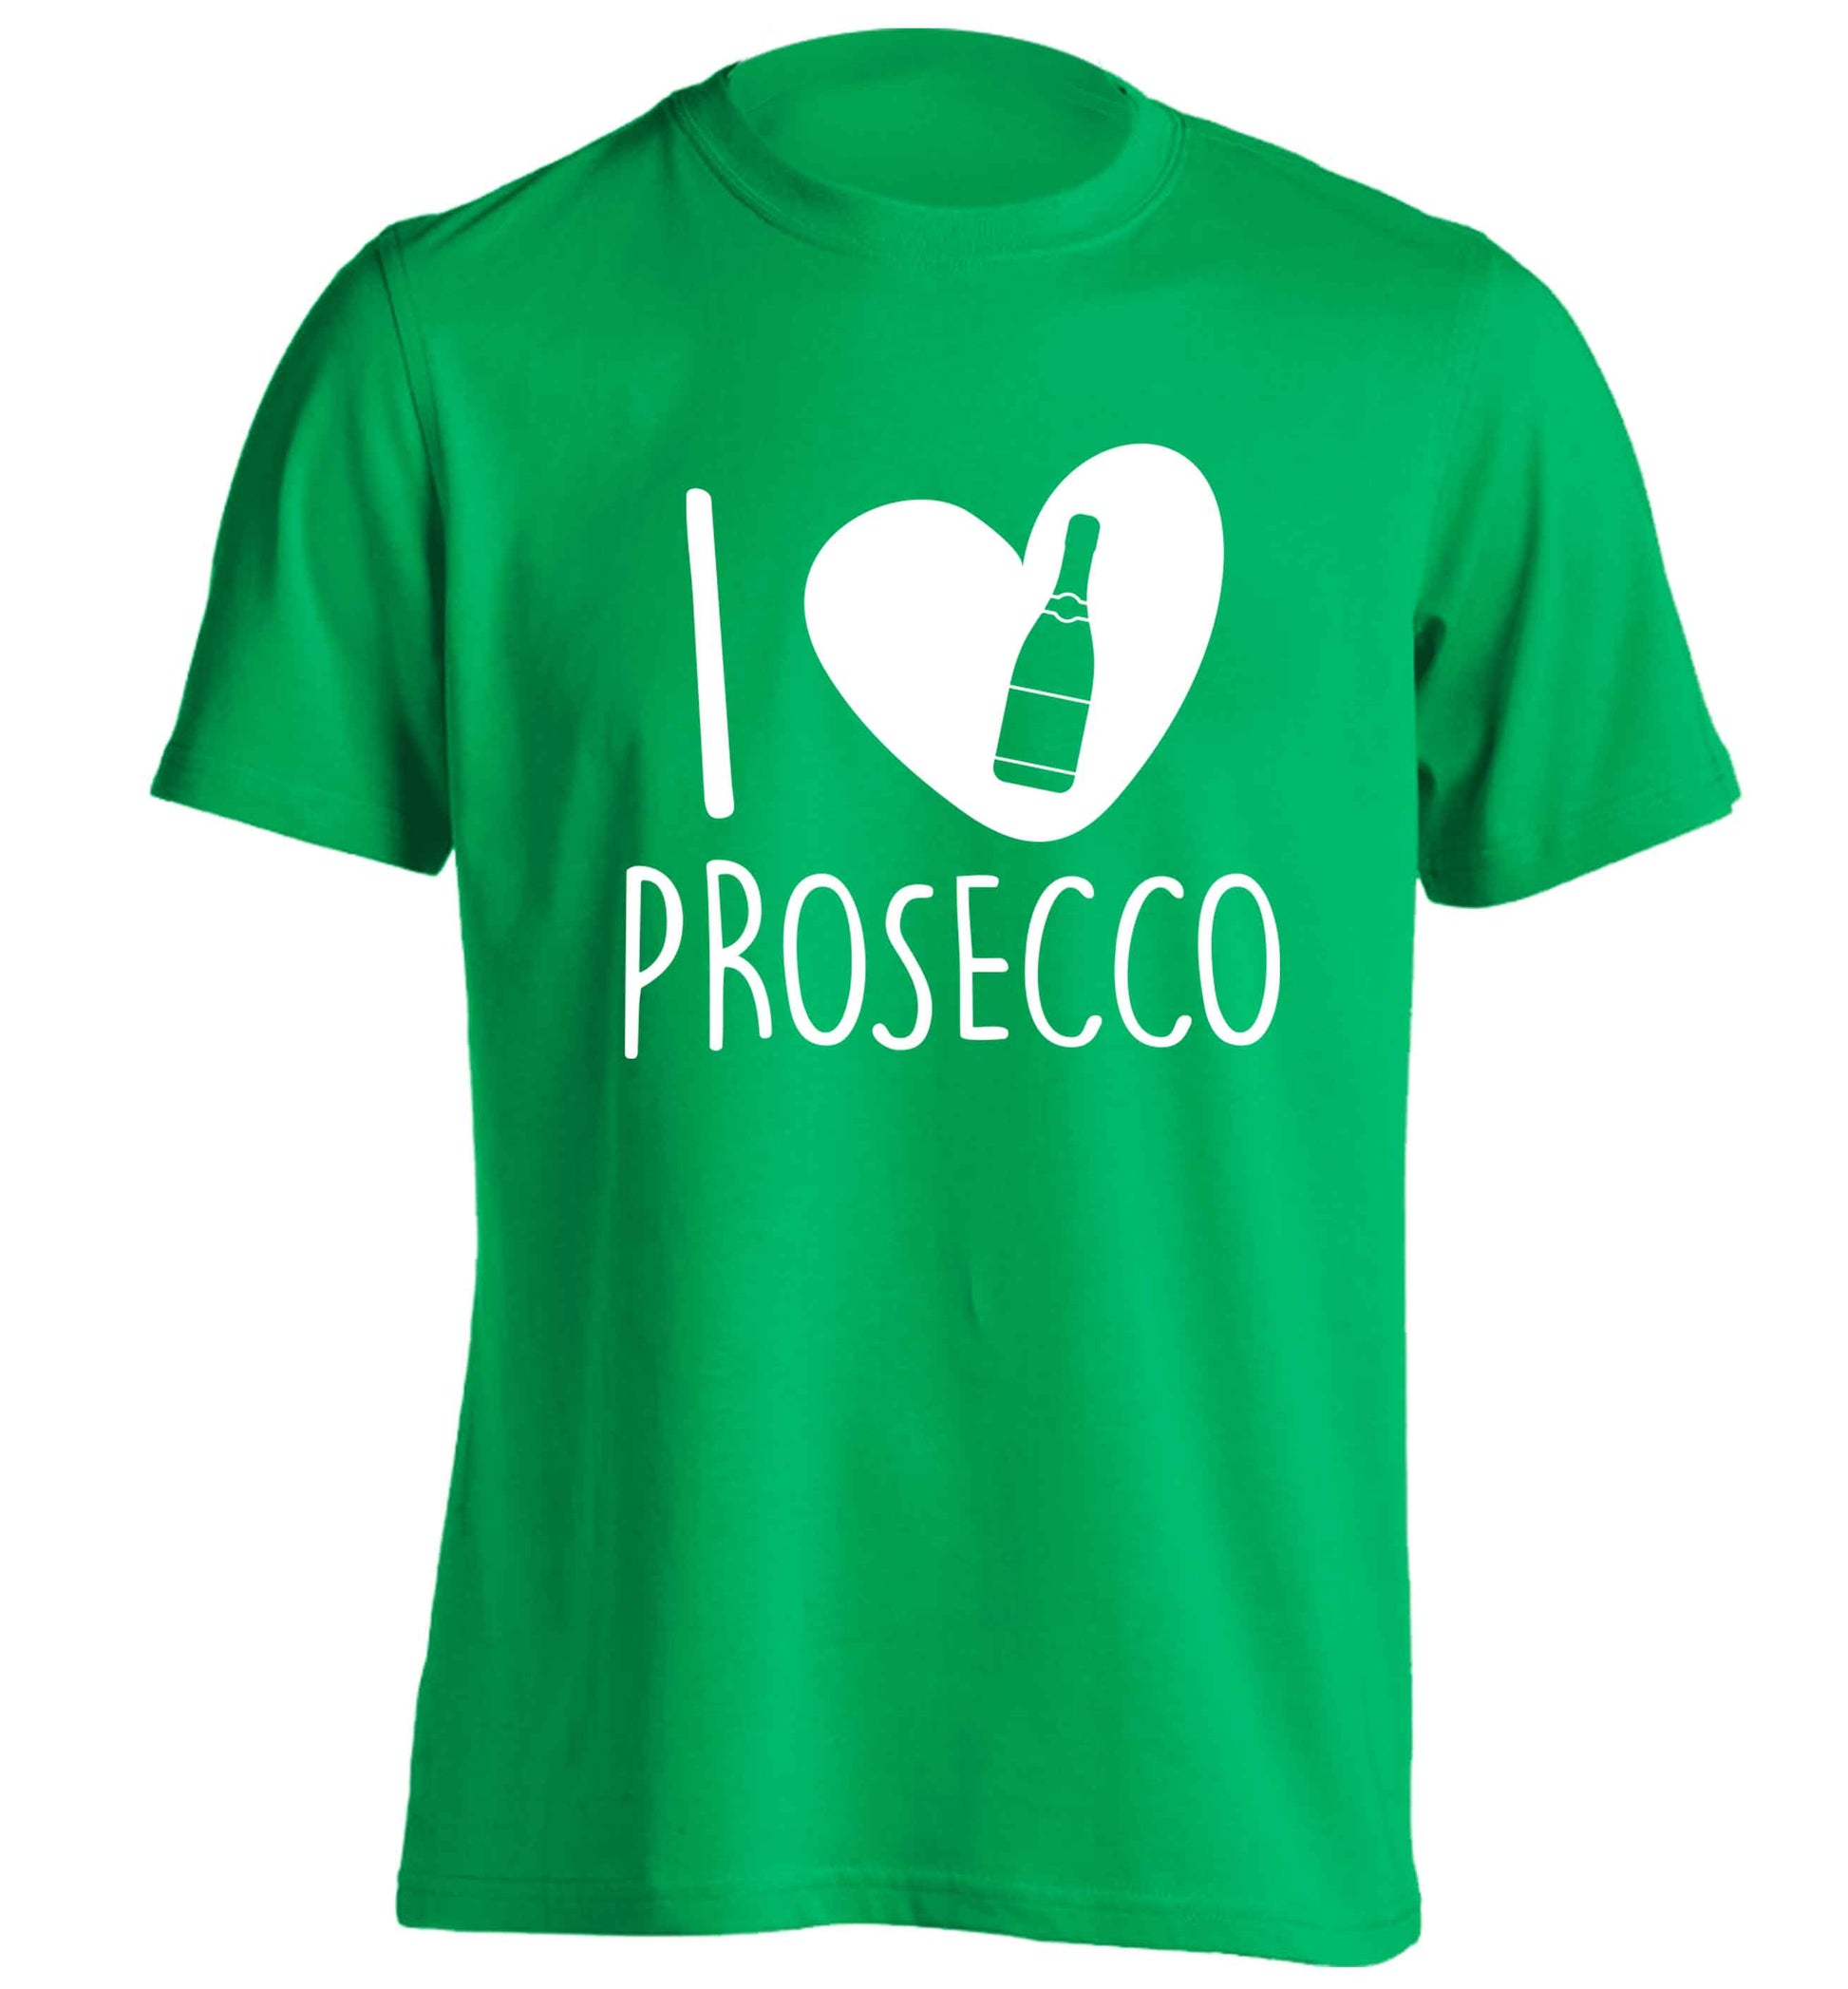 I love prosecco adults unisex green Tshirt 2XL